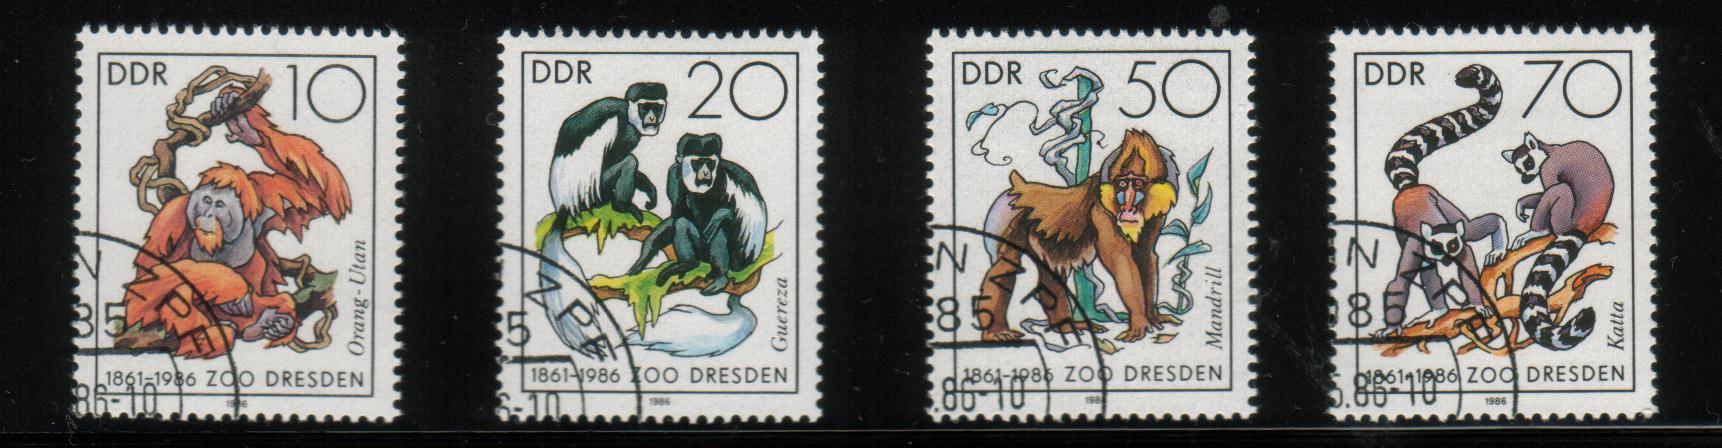 DDR 1986 DRESDEN ZOO (APES) SET OF 4 VFU - Mono